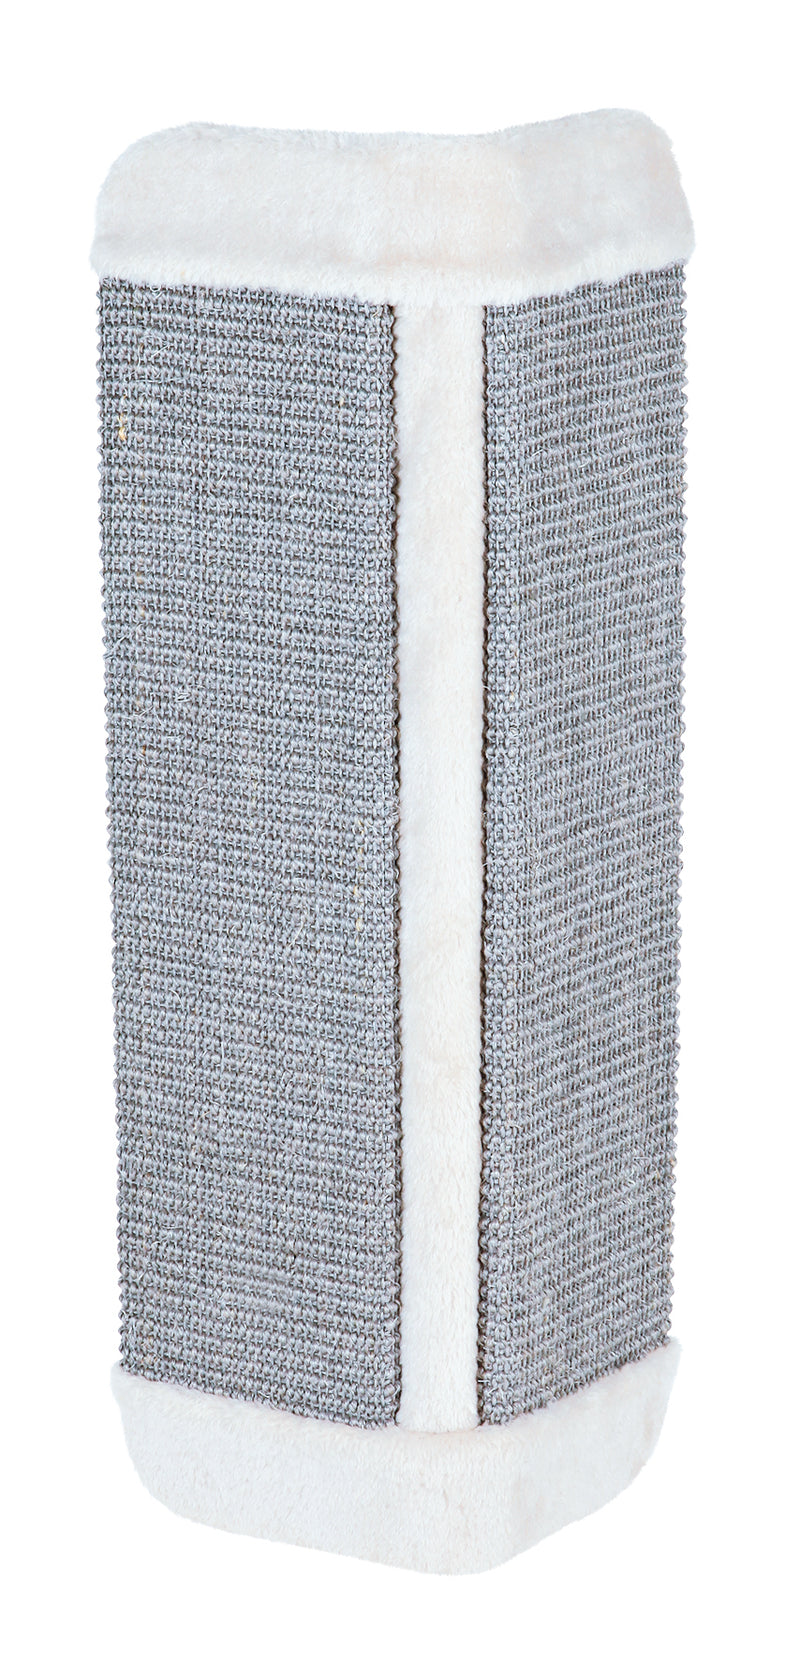 43435 Scratching board for corners, 32 x 60 cm, grey/light grey